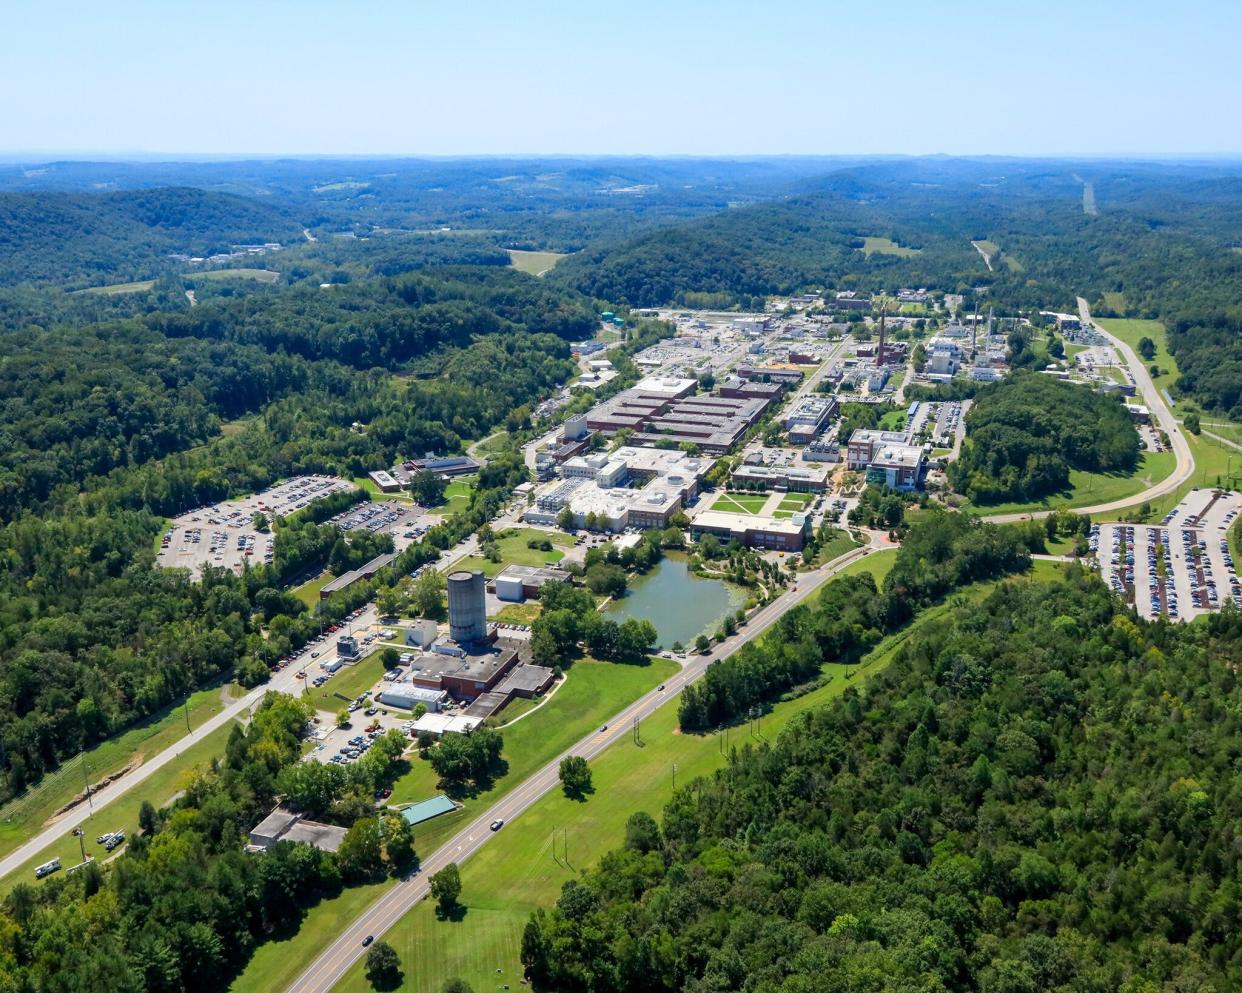 An aerial view of Oak Ridge National Laboratory